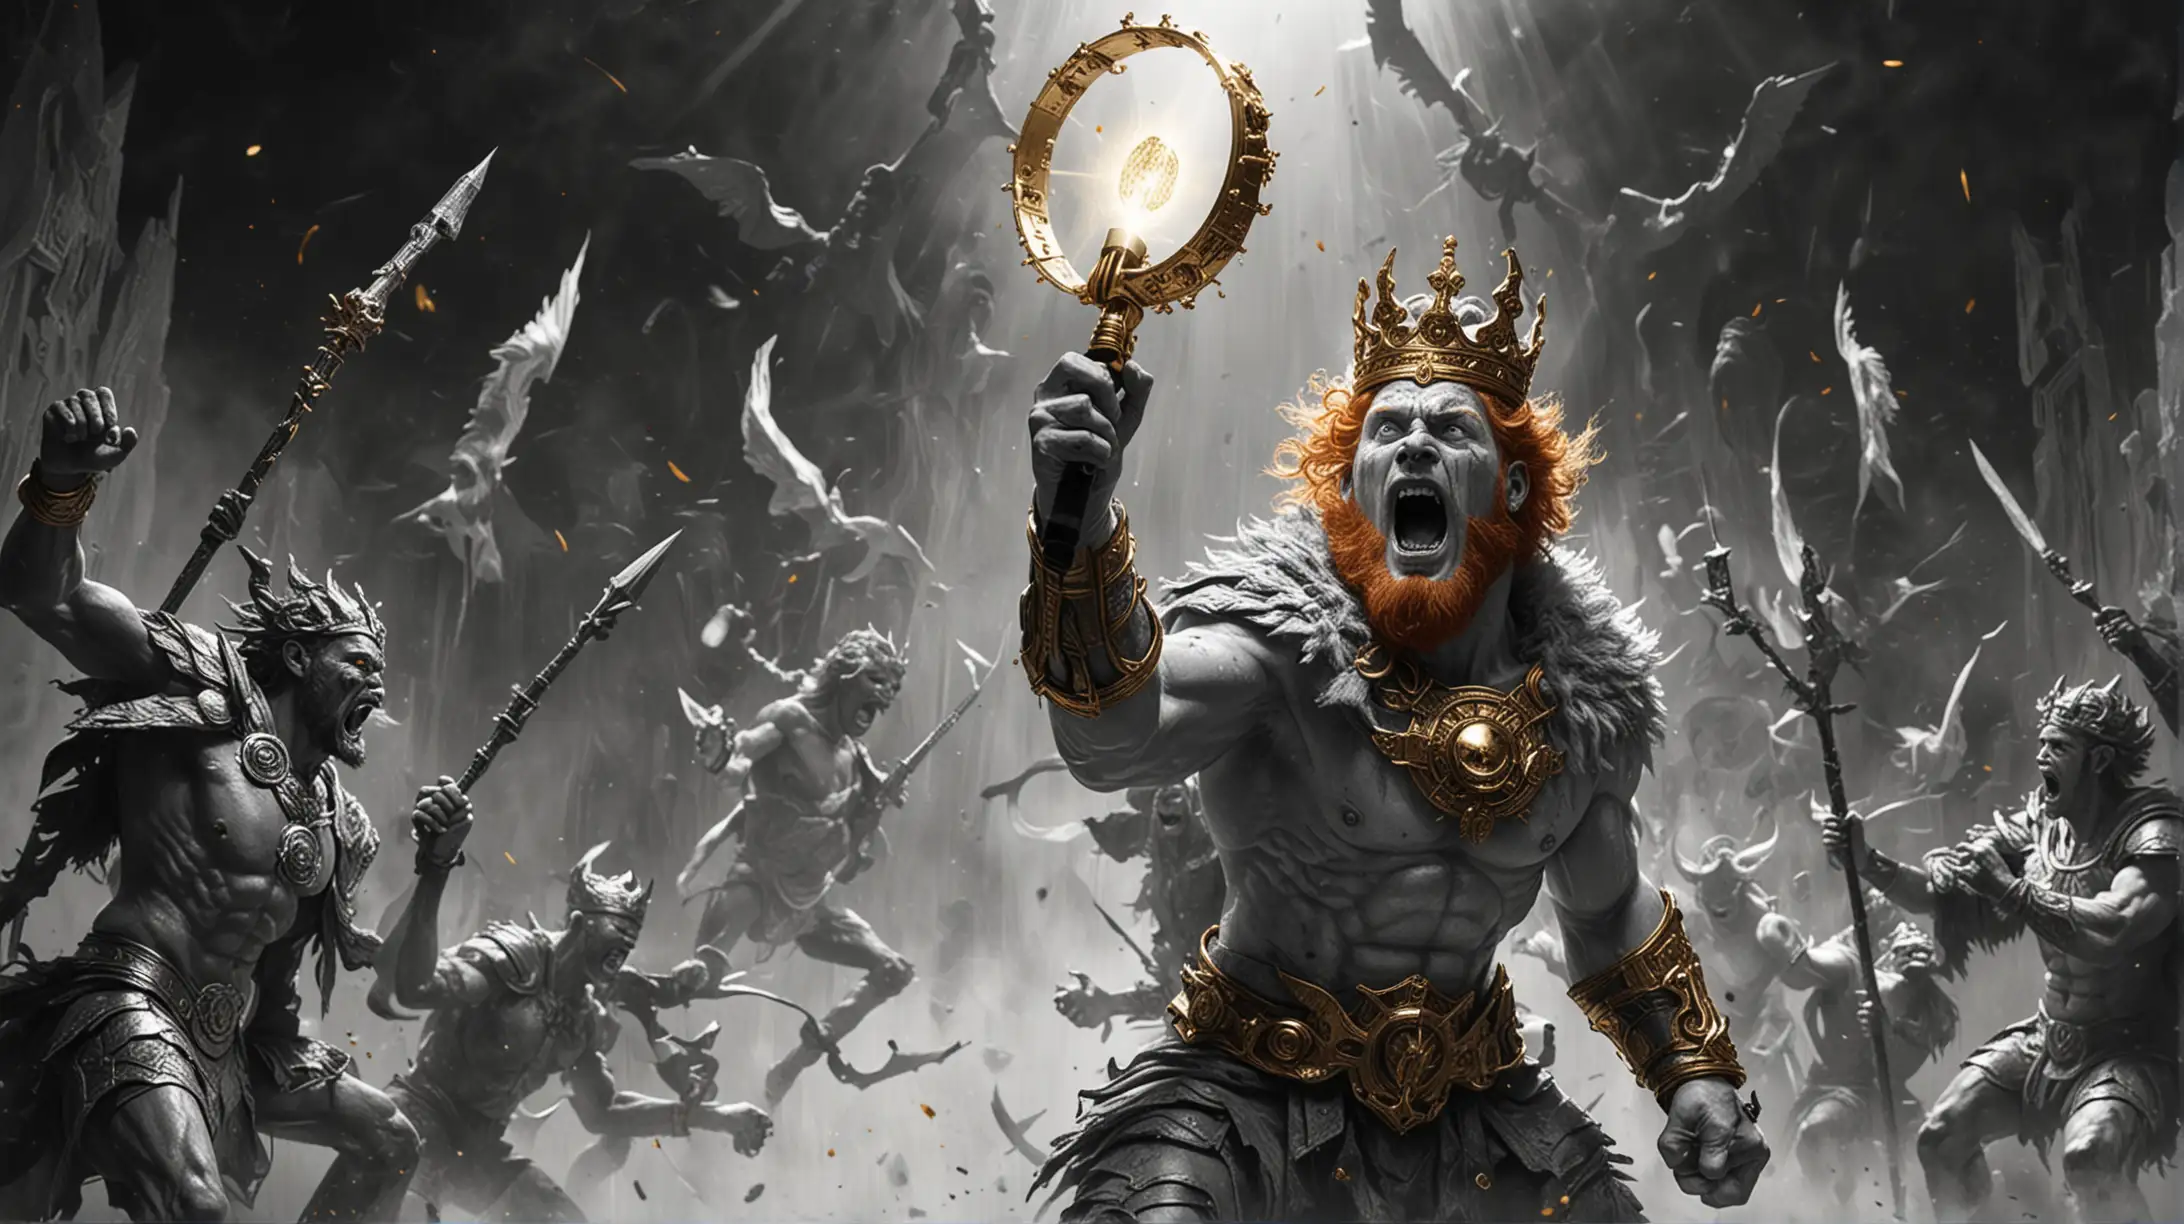 Epic Battle Ginge the God King Defends with Golden Halo Mic